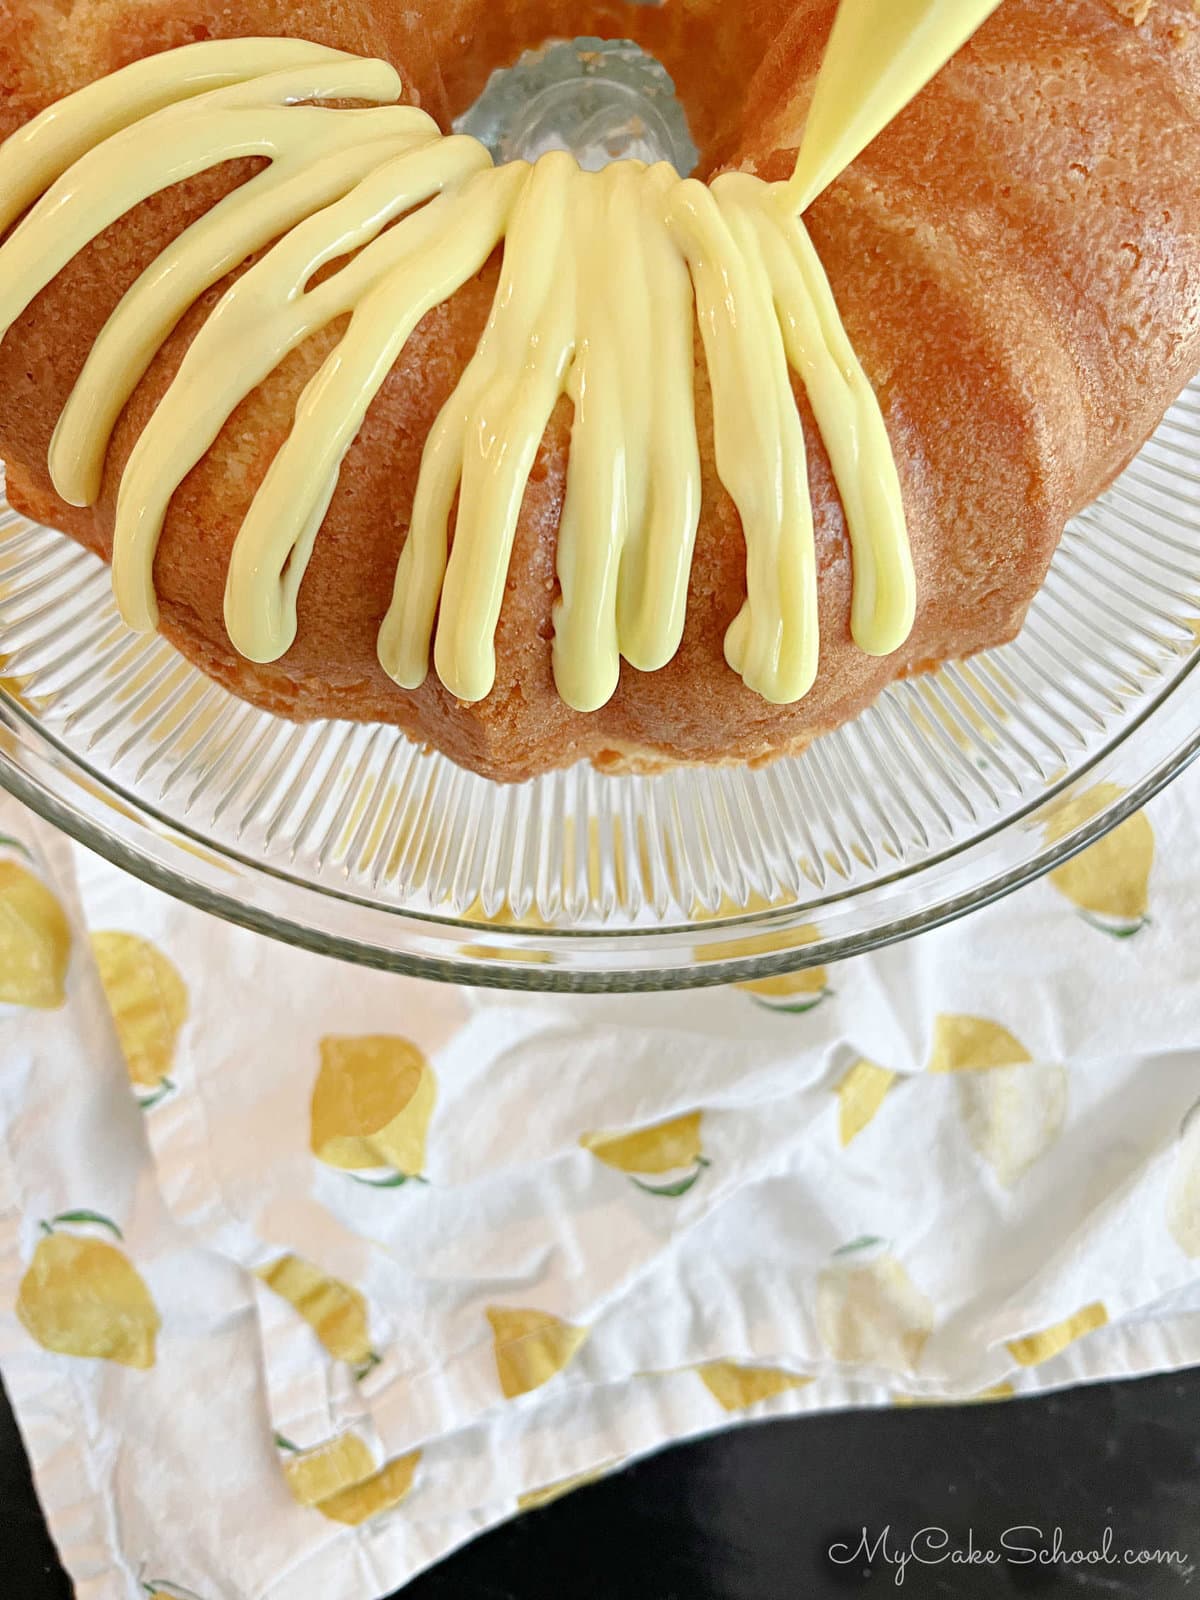 Glazing lemonade cake with lemon glaze